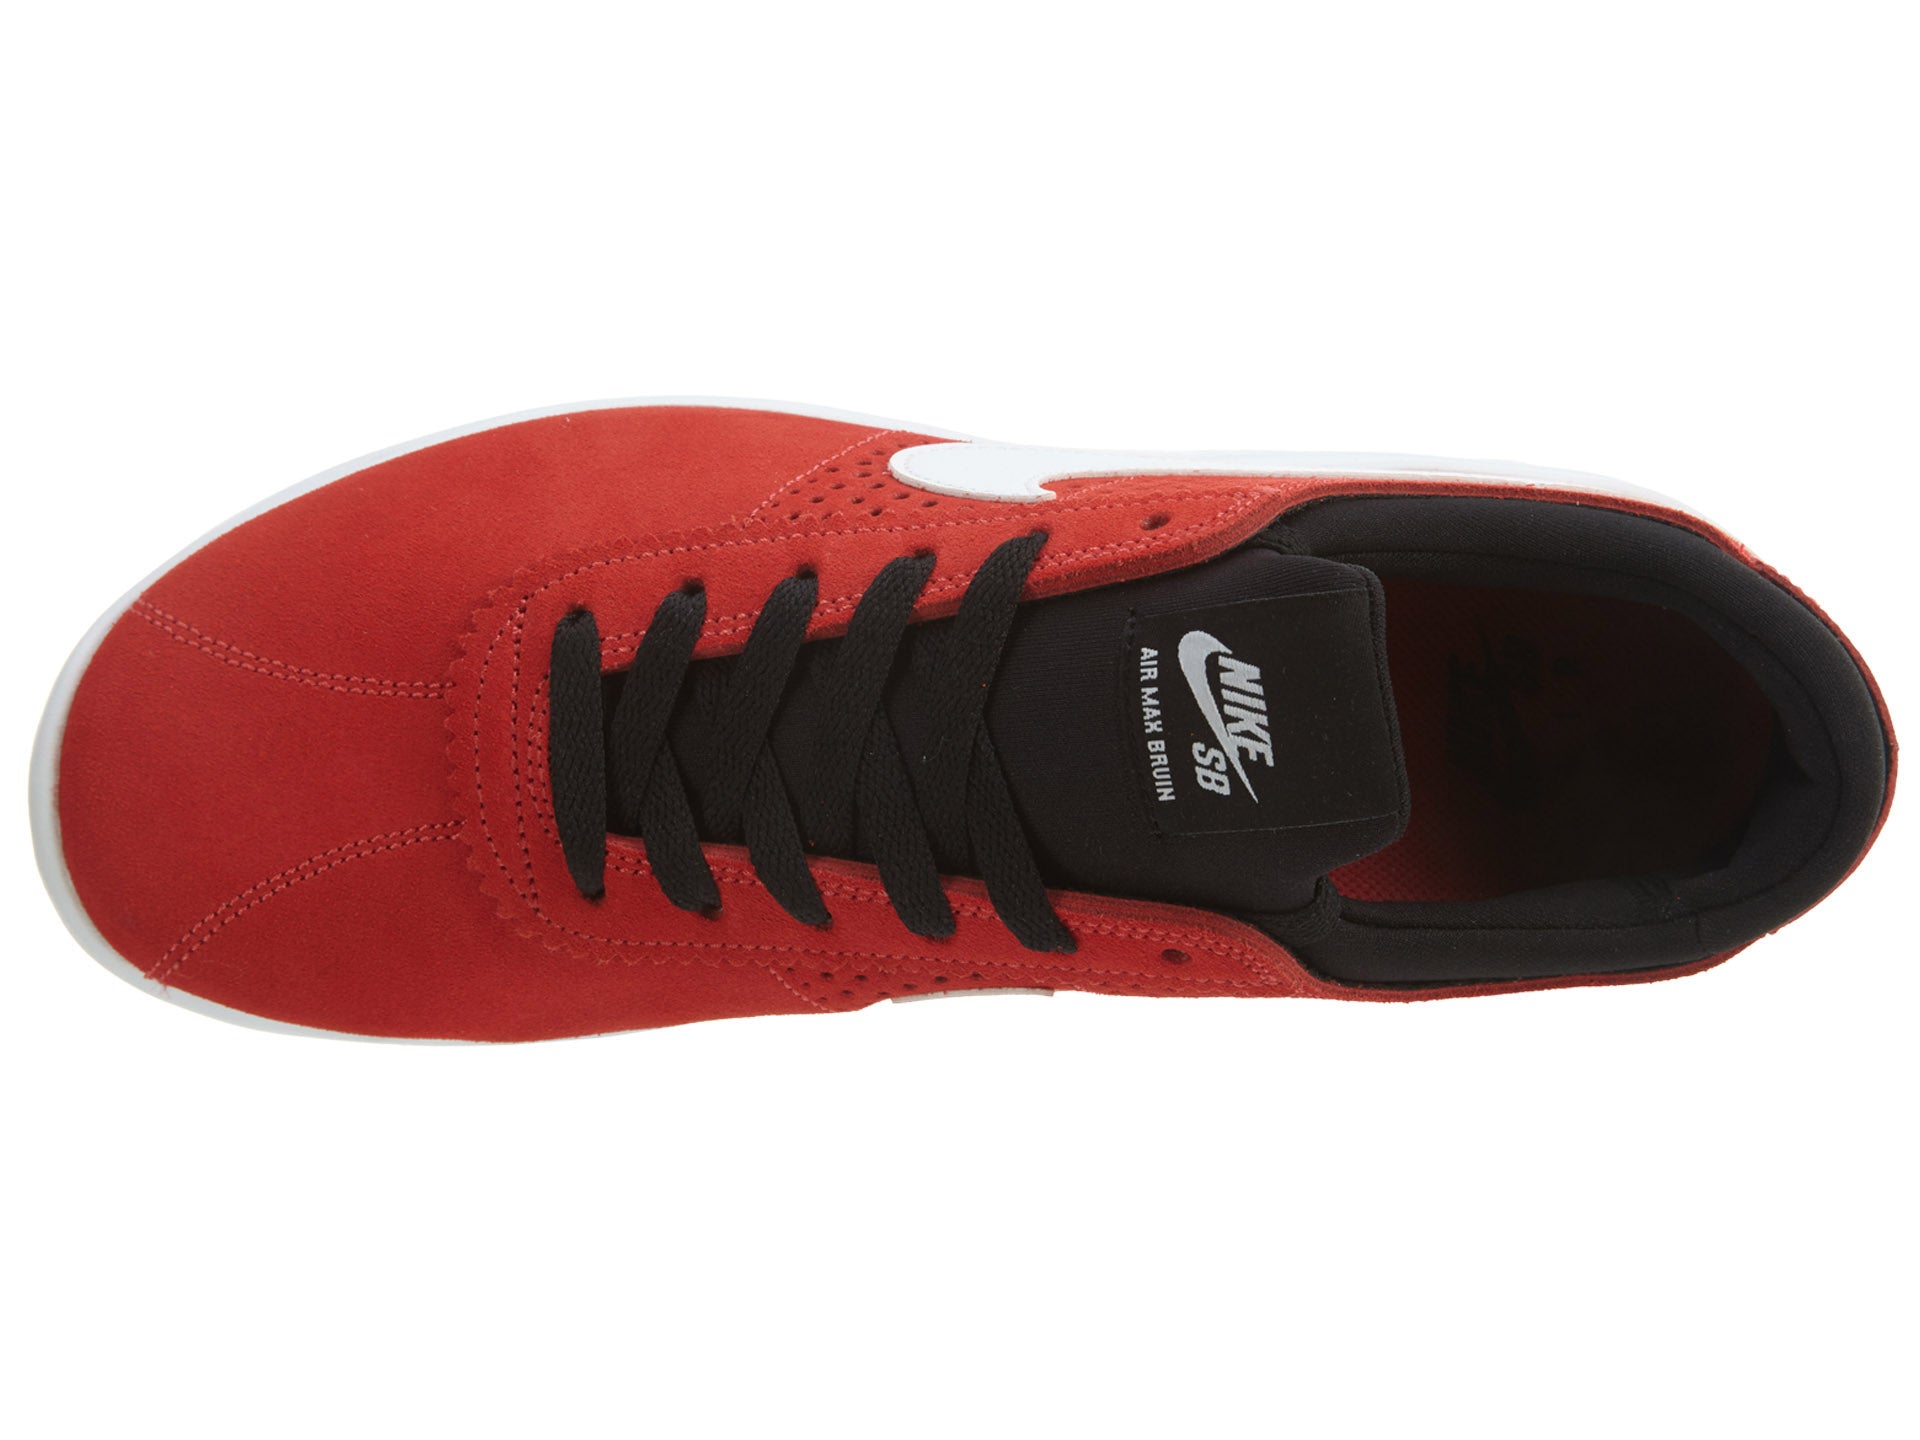 Nike Sb Bruin Max Vapor Track Red White-Black-Black